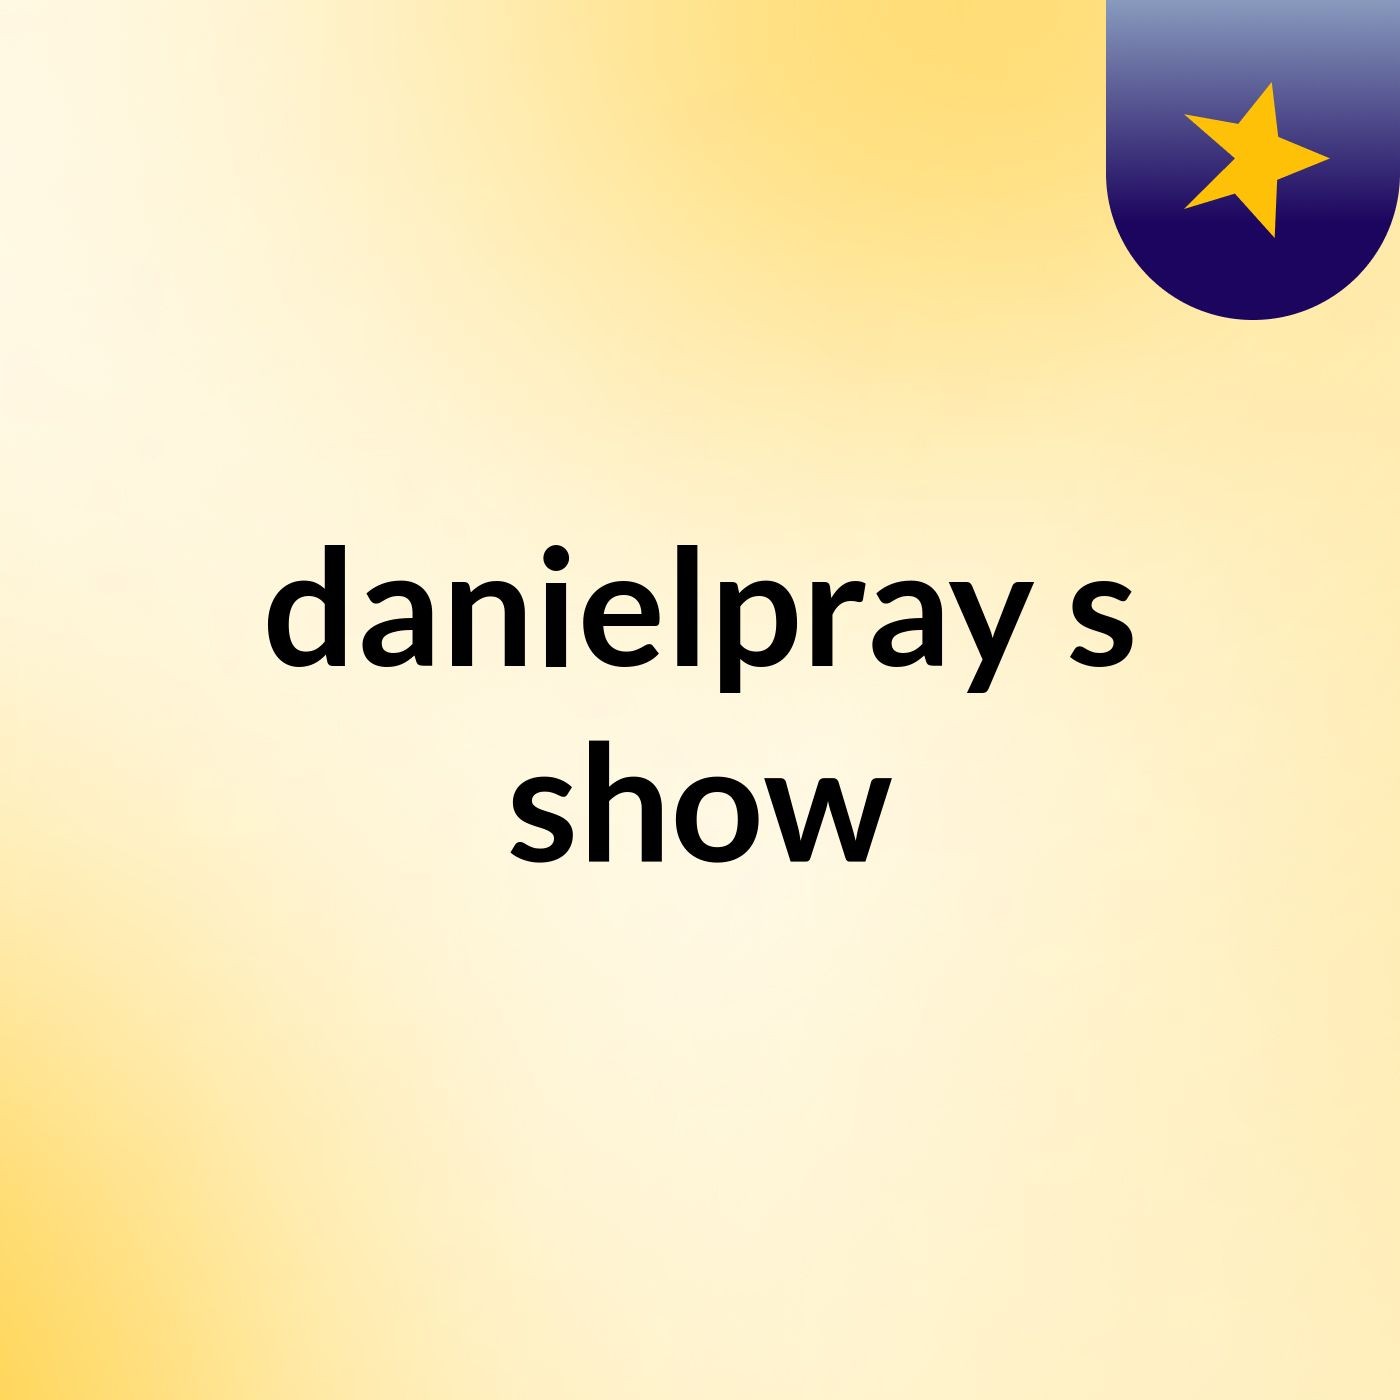 danielpray's show